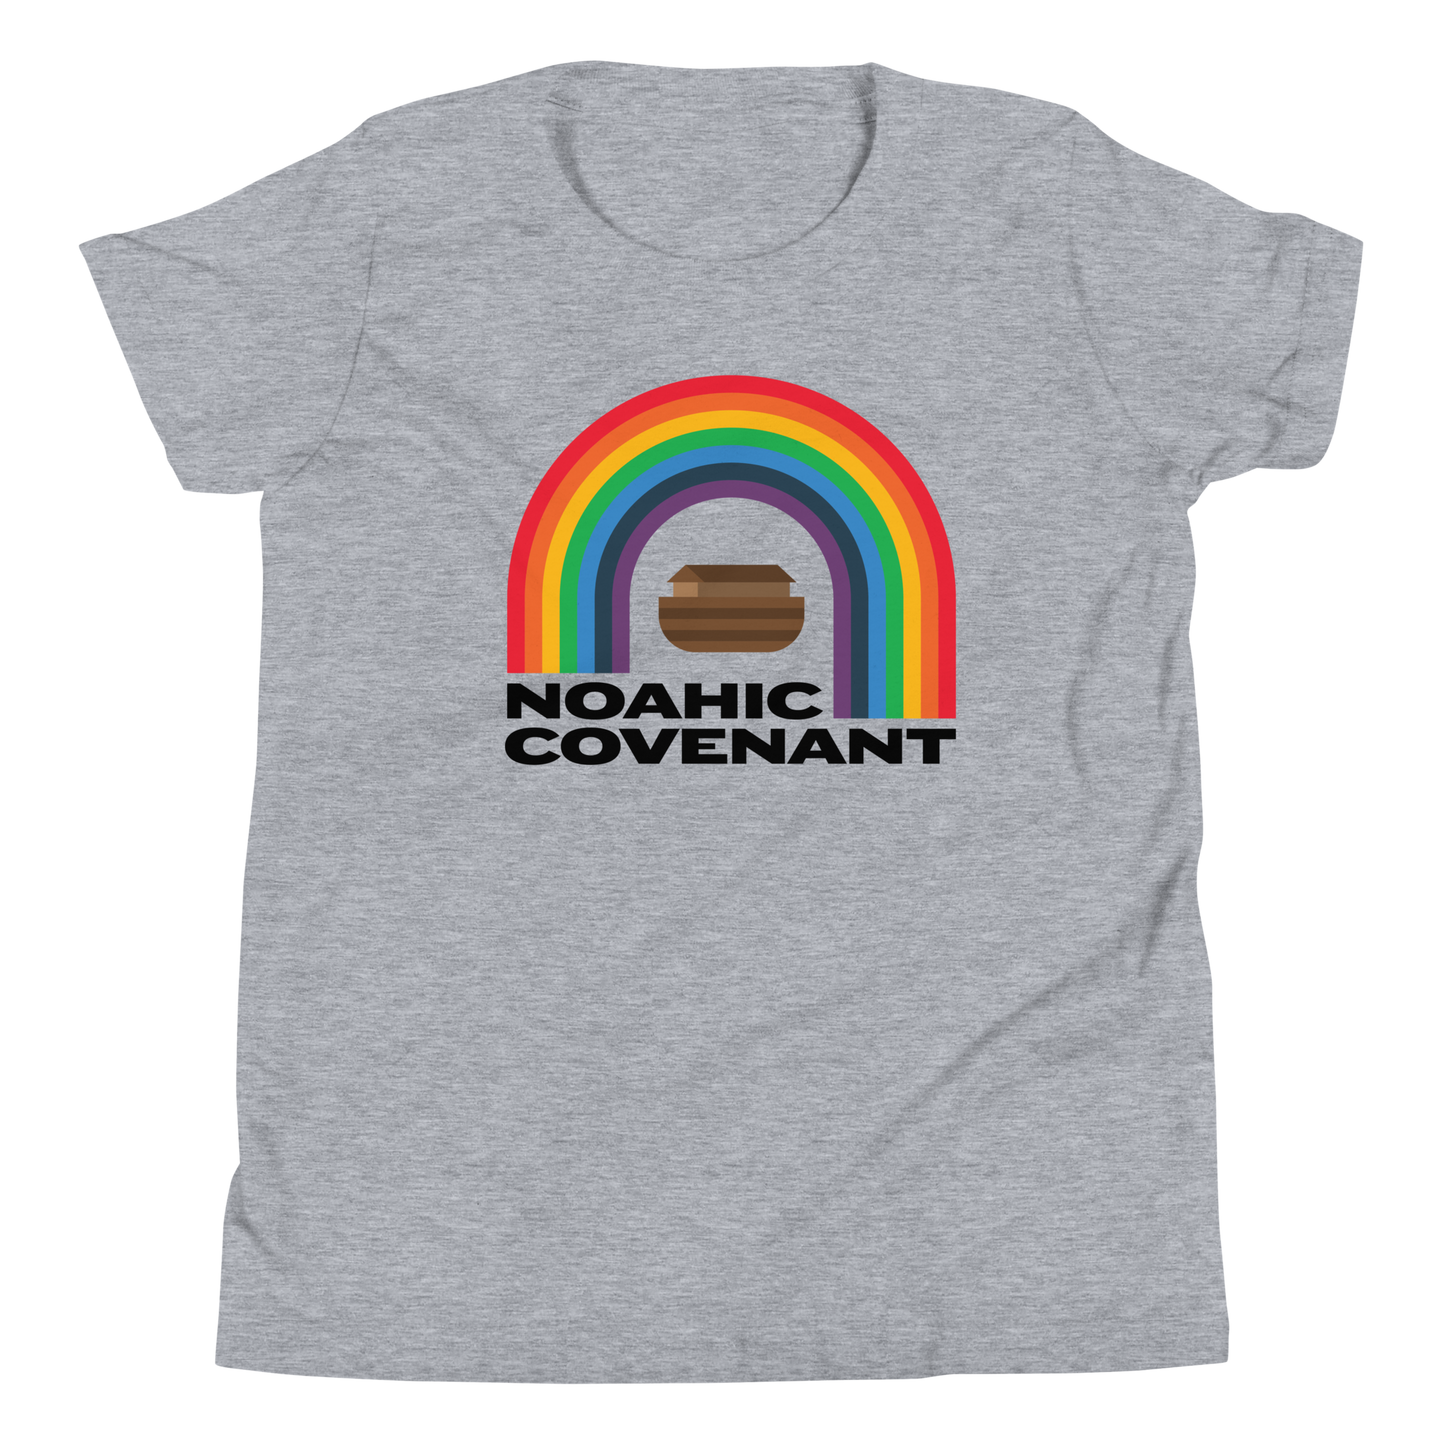 Noahic Covenant Youth T-Shirt